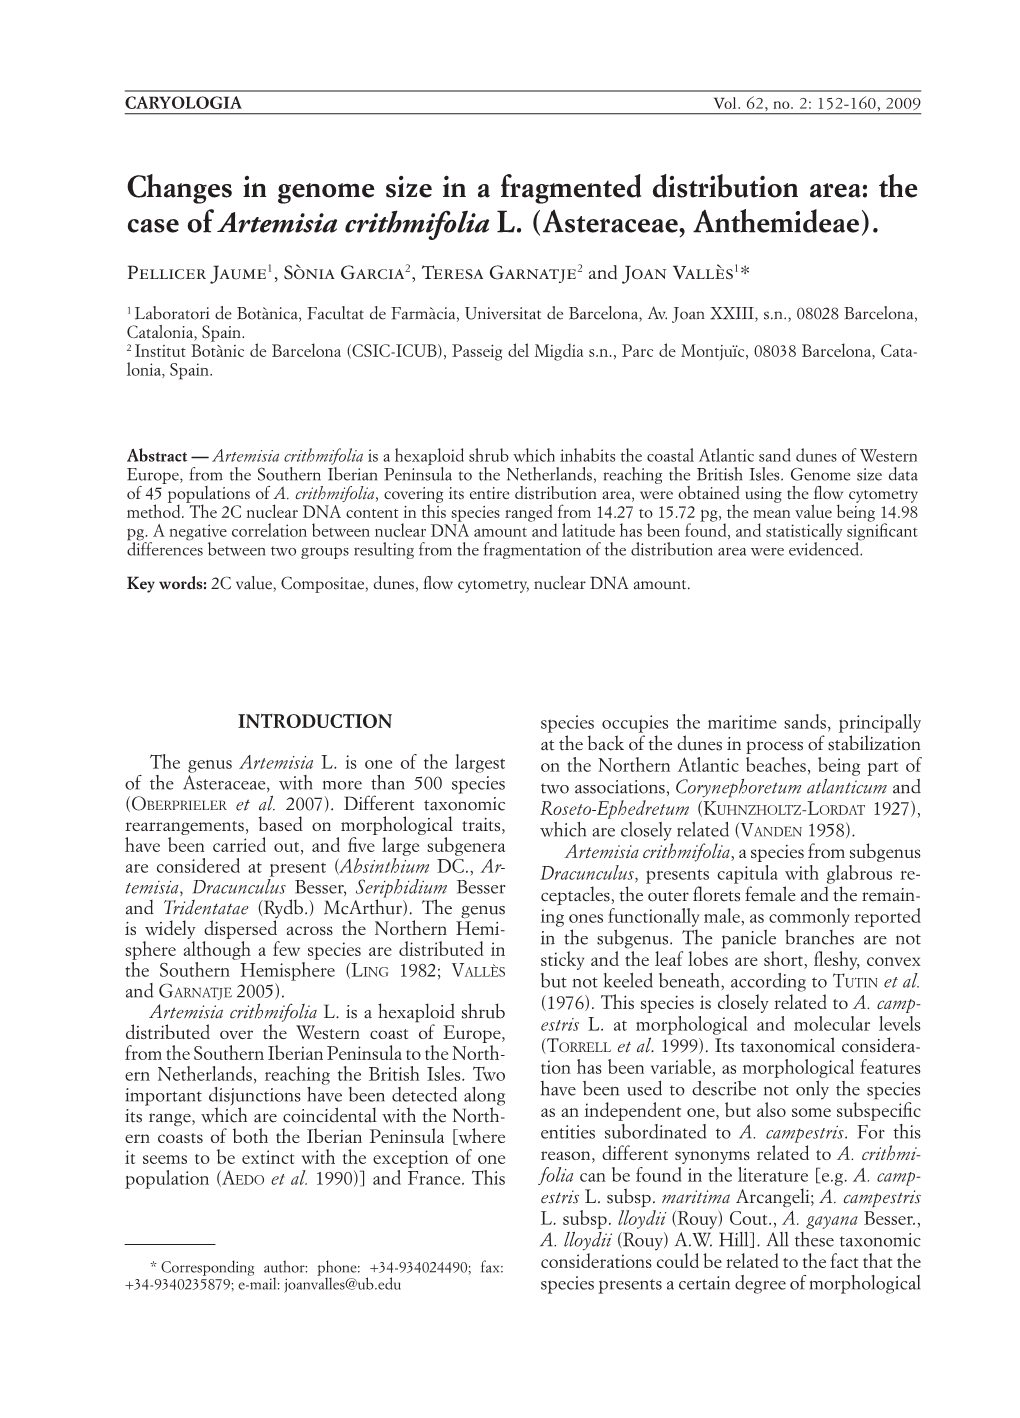 The Case of Artemisia Crithmifolia L. (Asteraceae, Anthemideae)